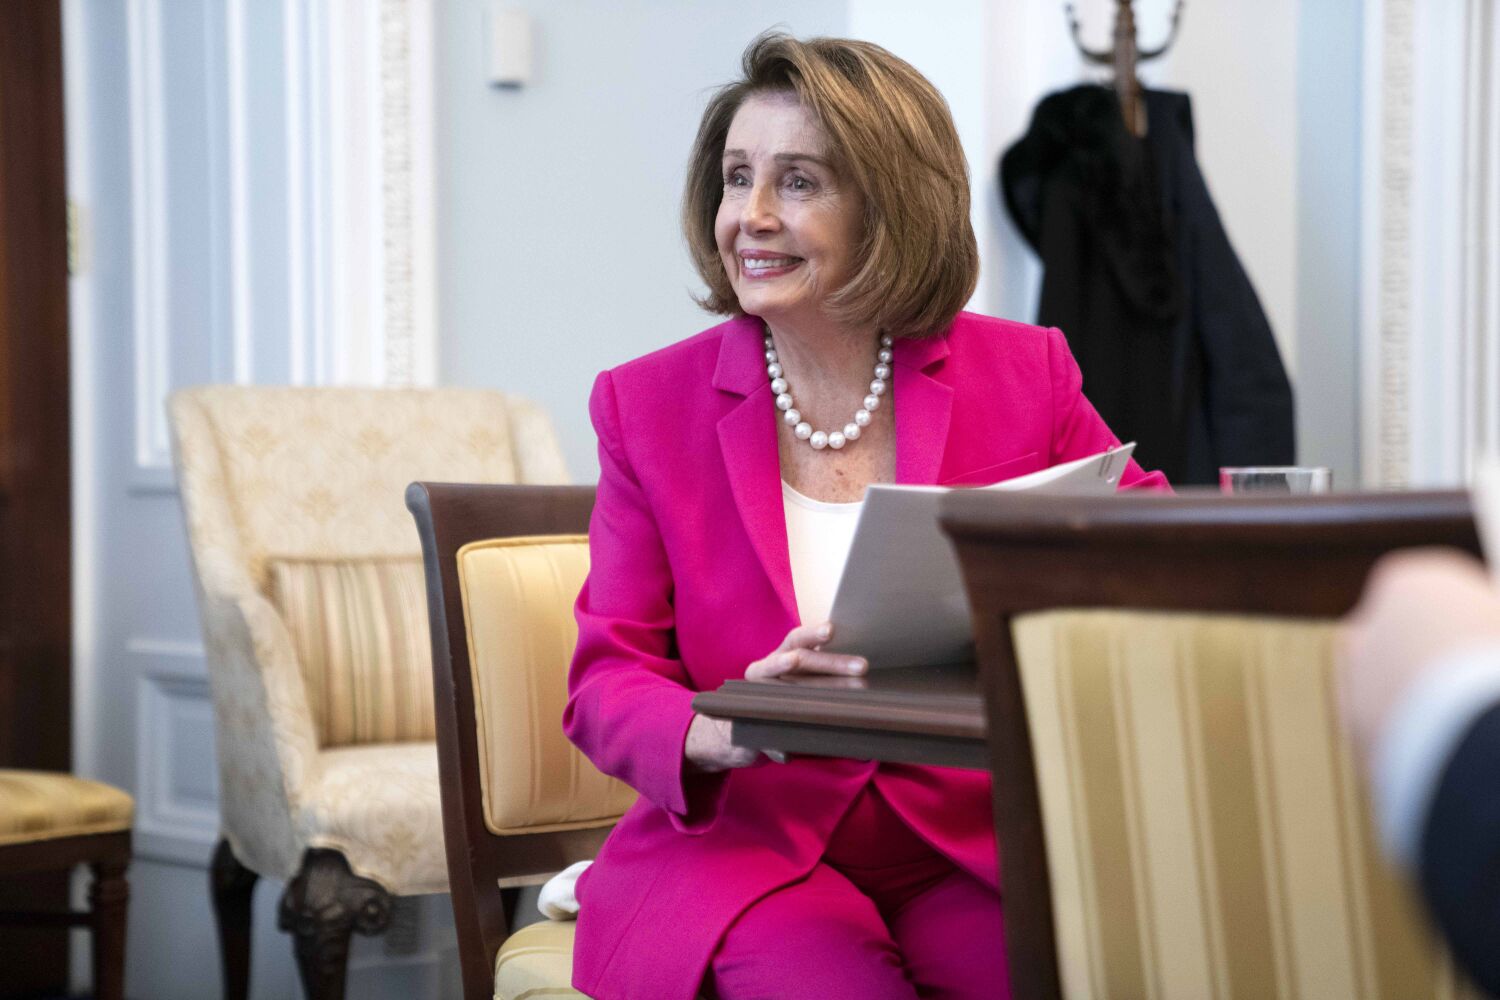 'I'm emancipated now': Nancy Pelosi enjoying life after leadership